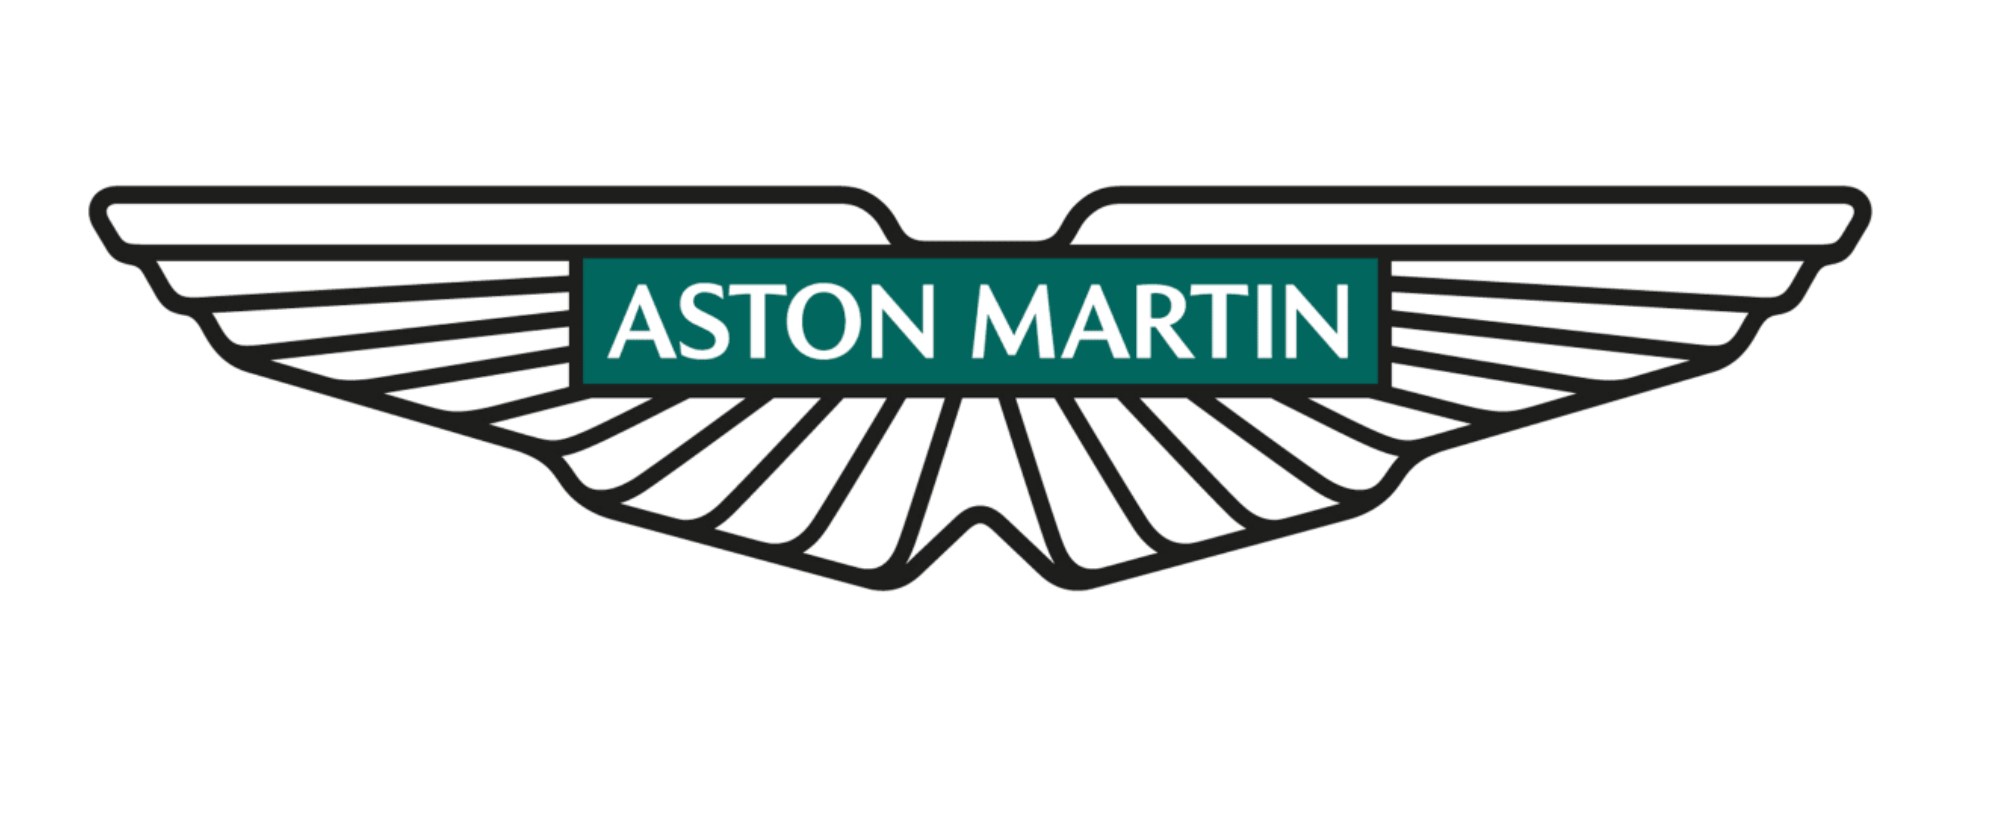 aria-label="Aston Martin 2022 new badge logo 2"